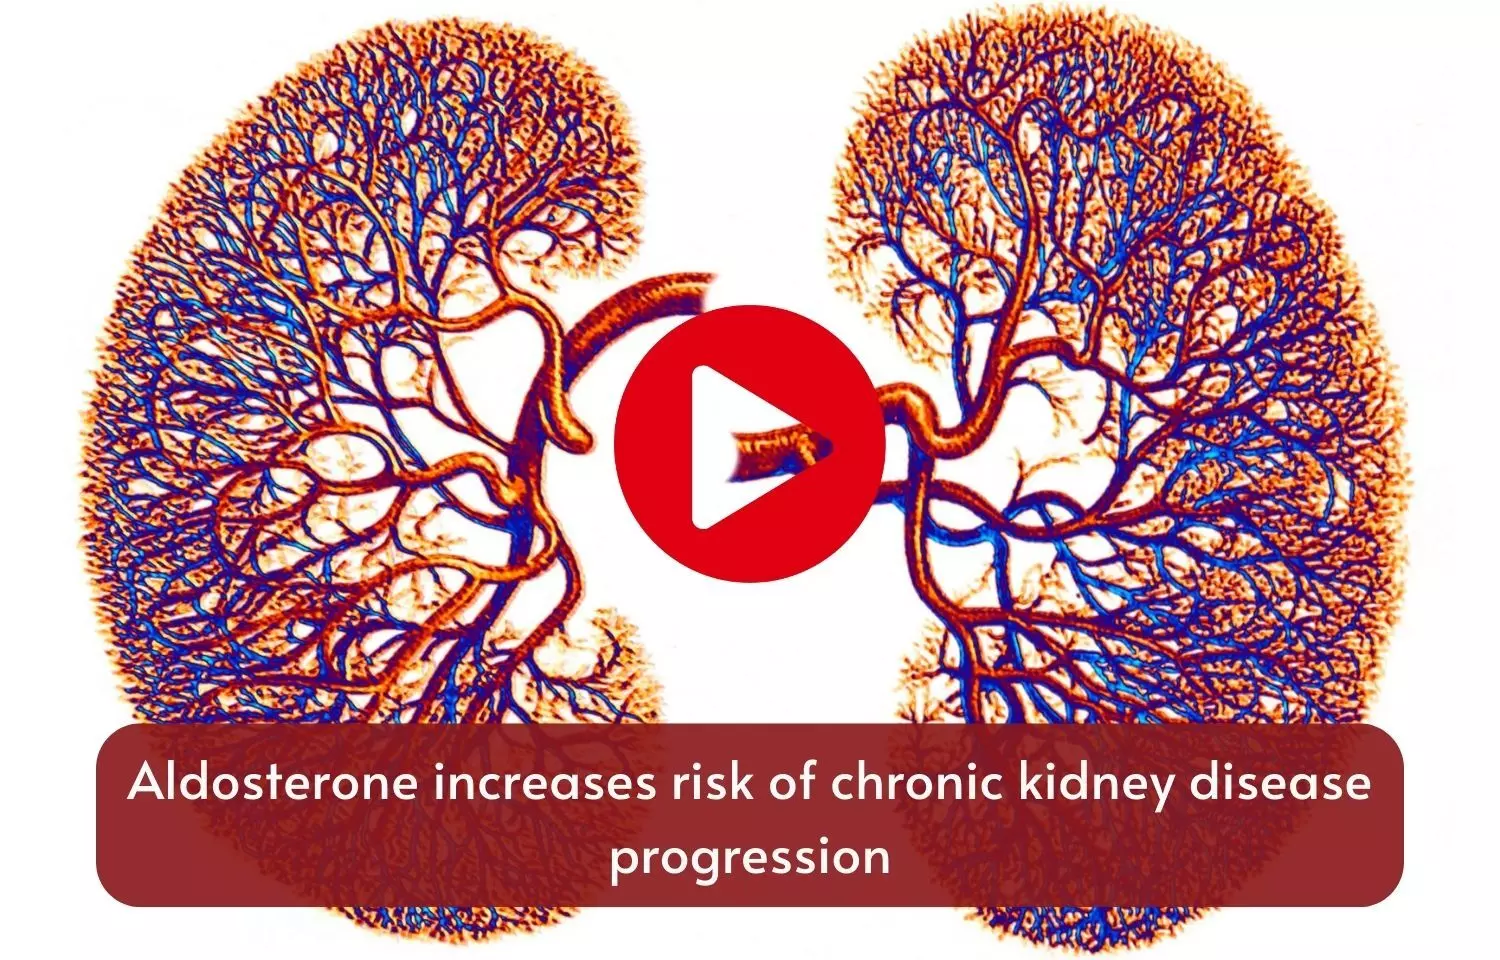 Aldosterone increases risk of chronic kidney disease progression